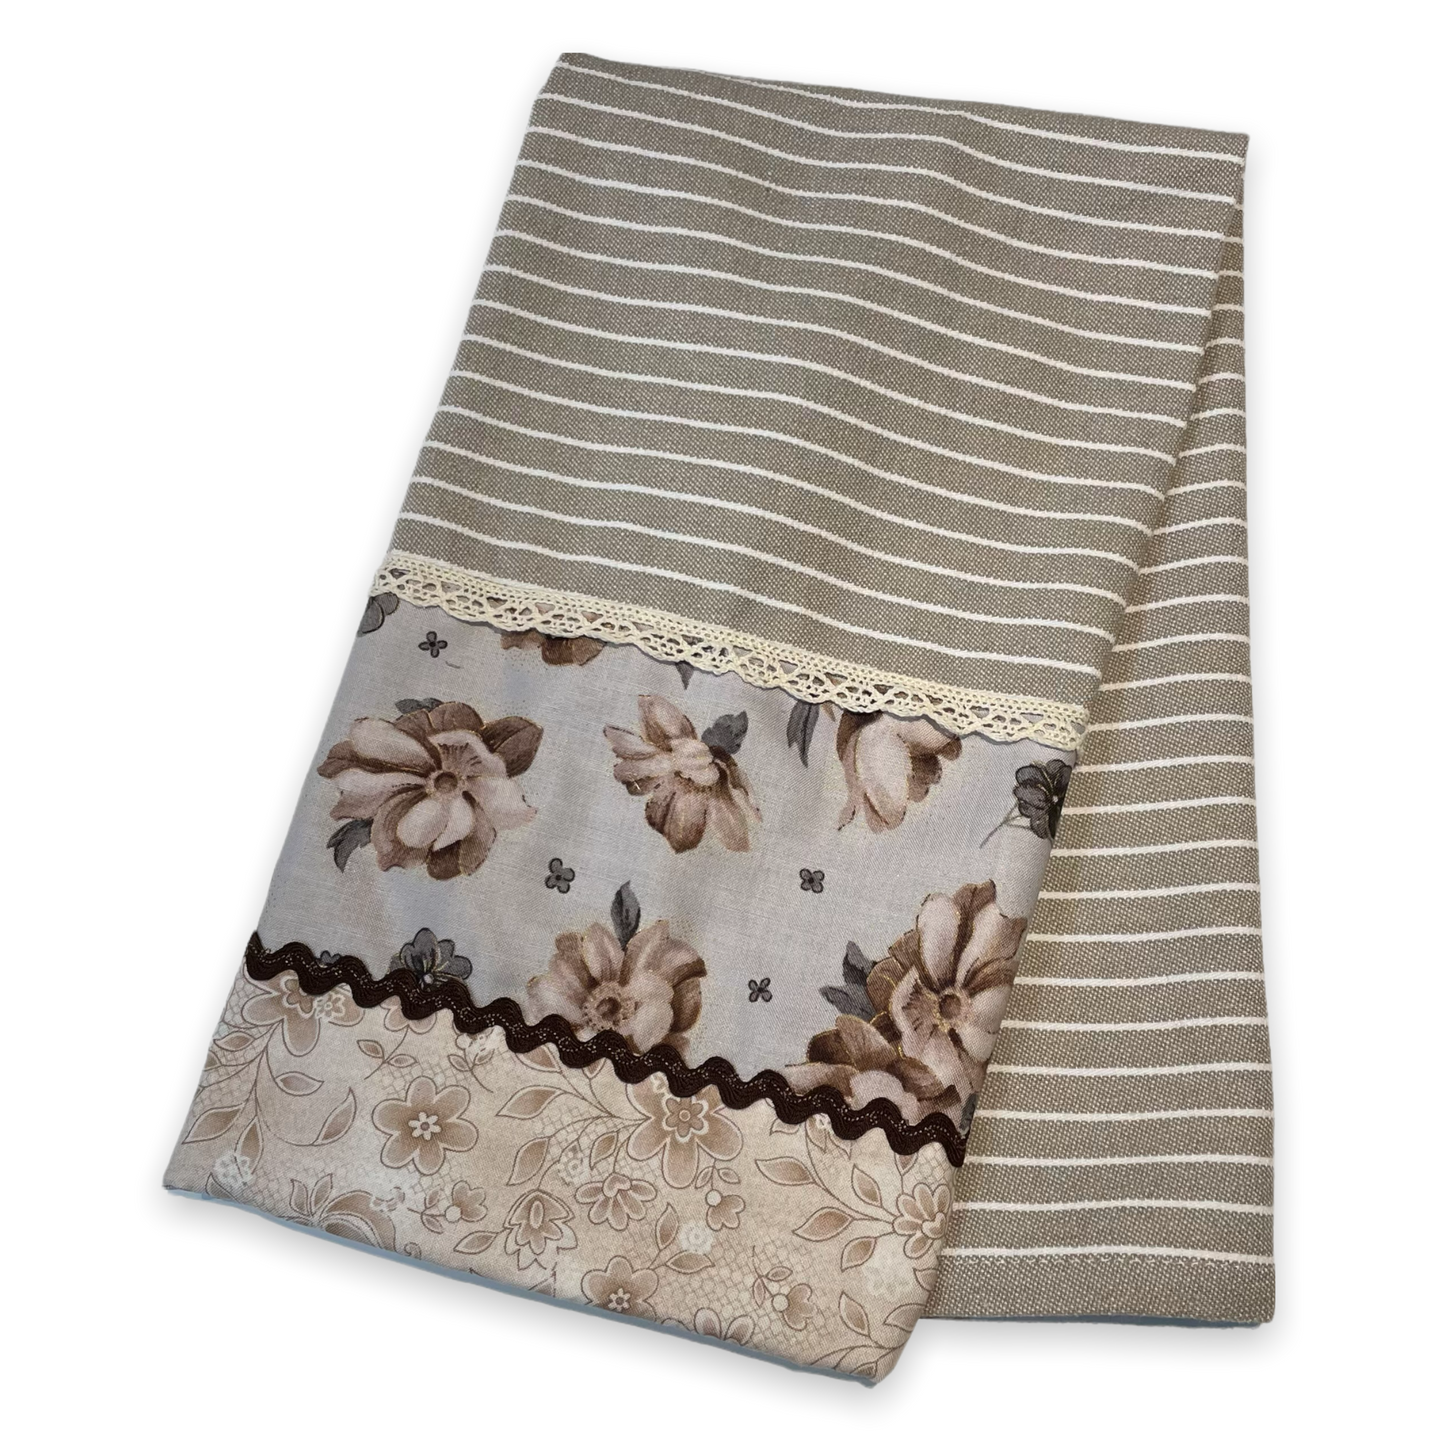 Modern Farmhouse Decorative Tea Towel. Brown and Cream Striped Dish Towel - Home Stitchery Decor